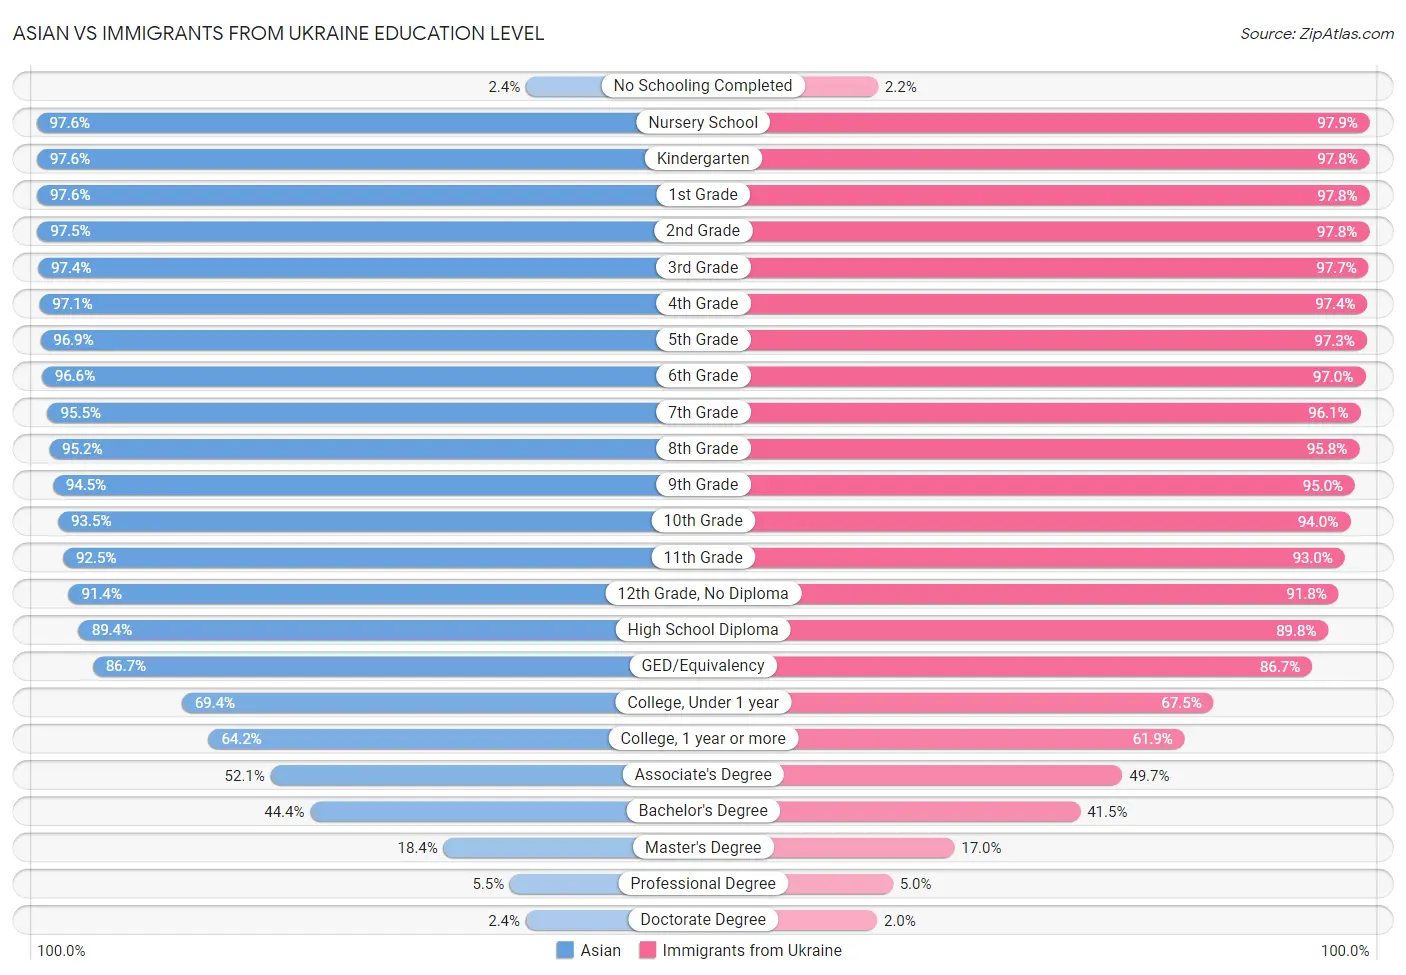 Asian vs Immigrants from Ukraine Education Level